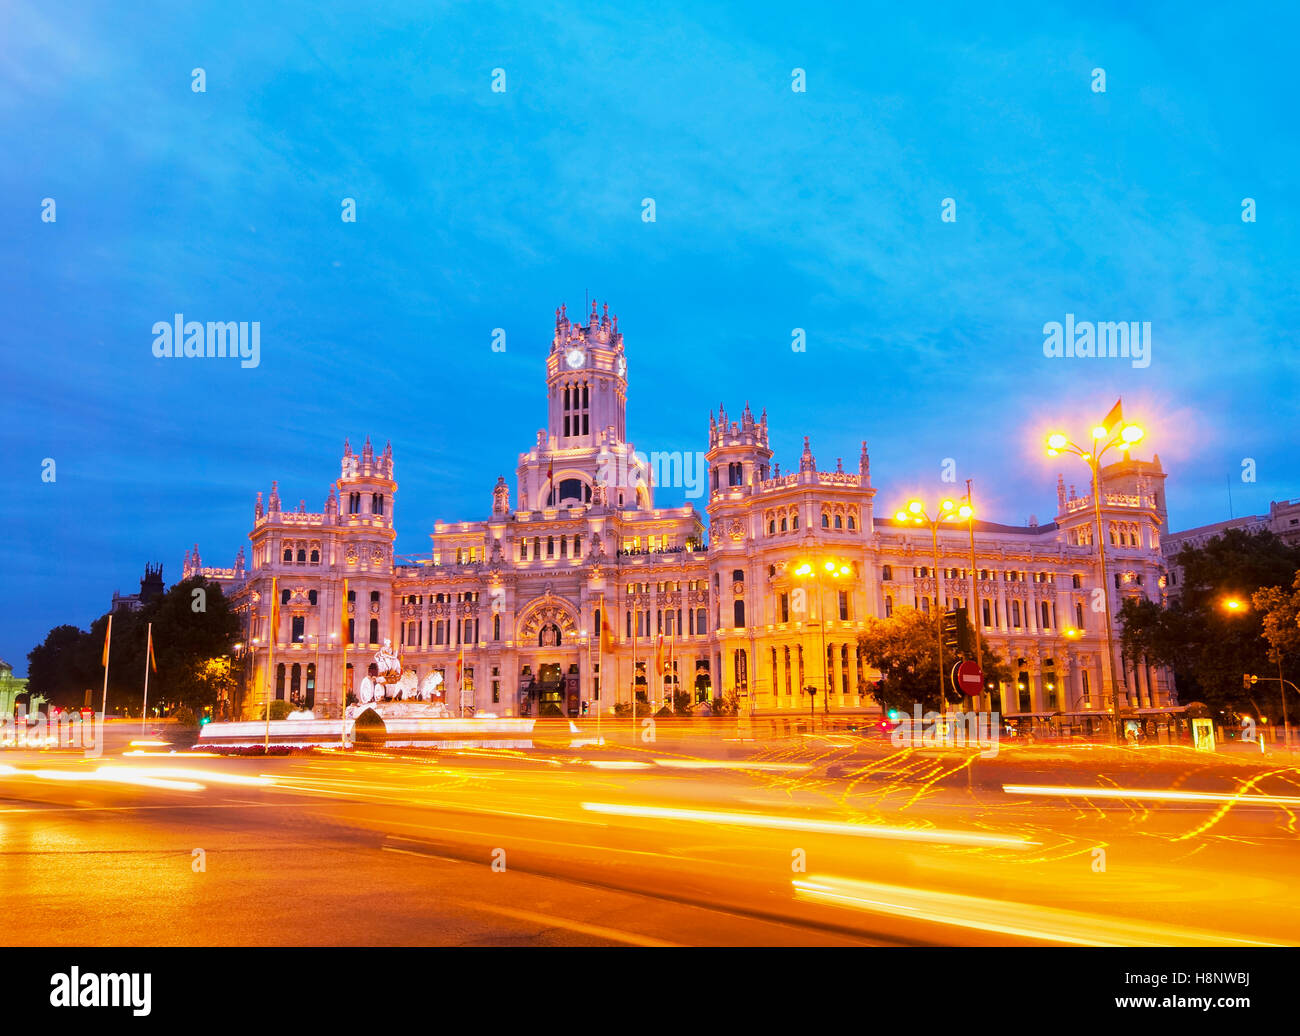 Spain, Madrid, Plaza de Cibeles, Twilight view of the Cybele Palace. Stock Photo